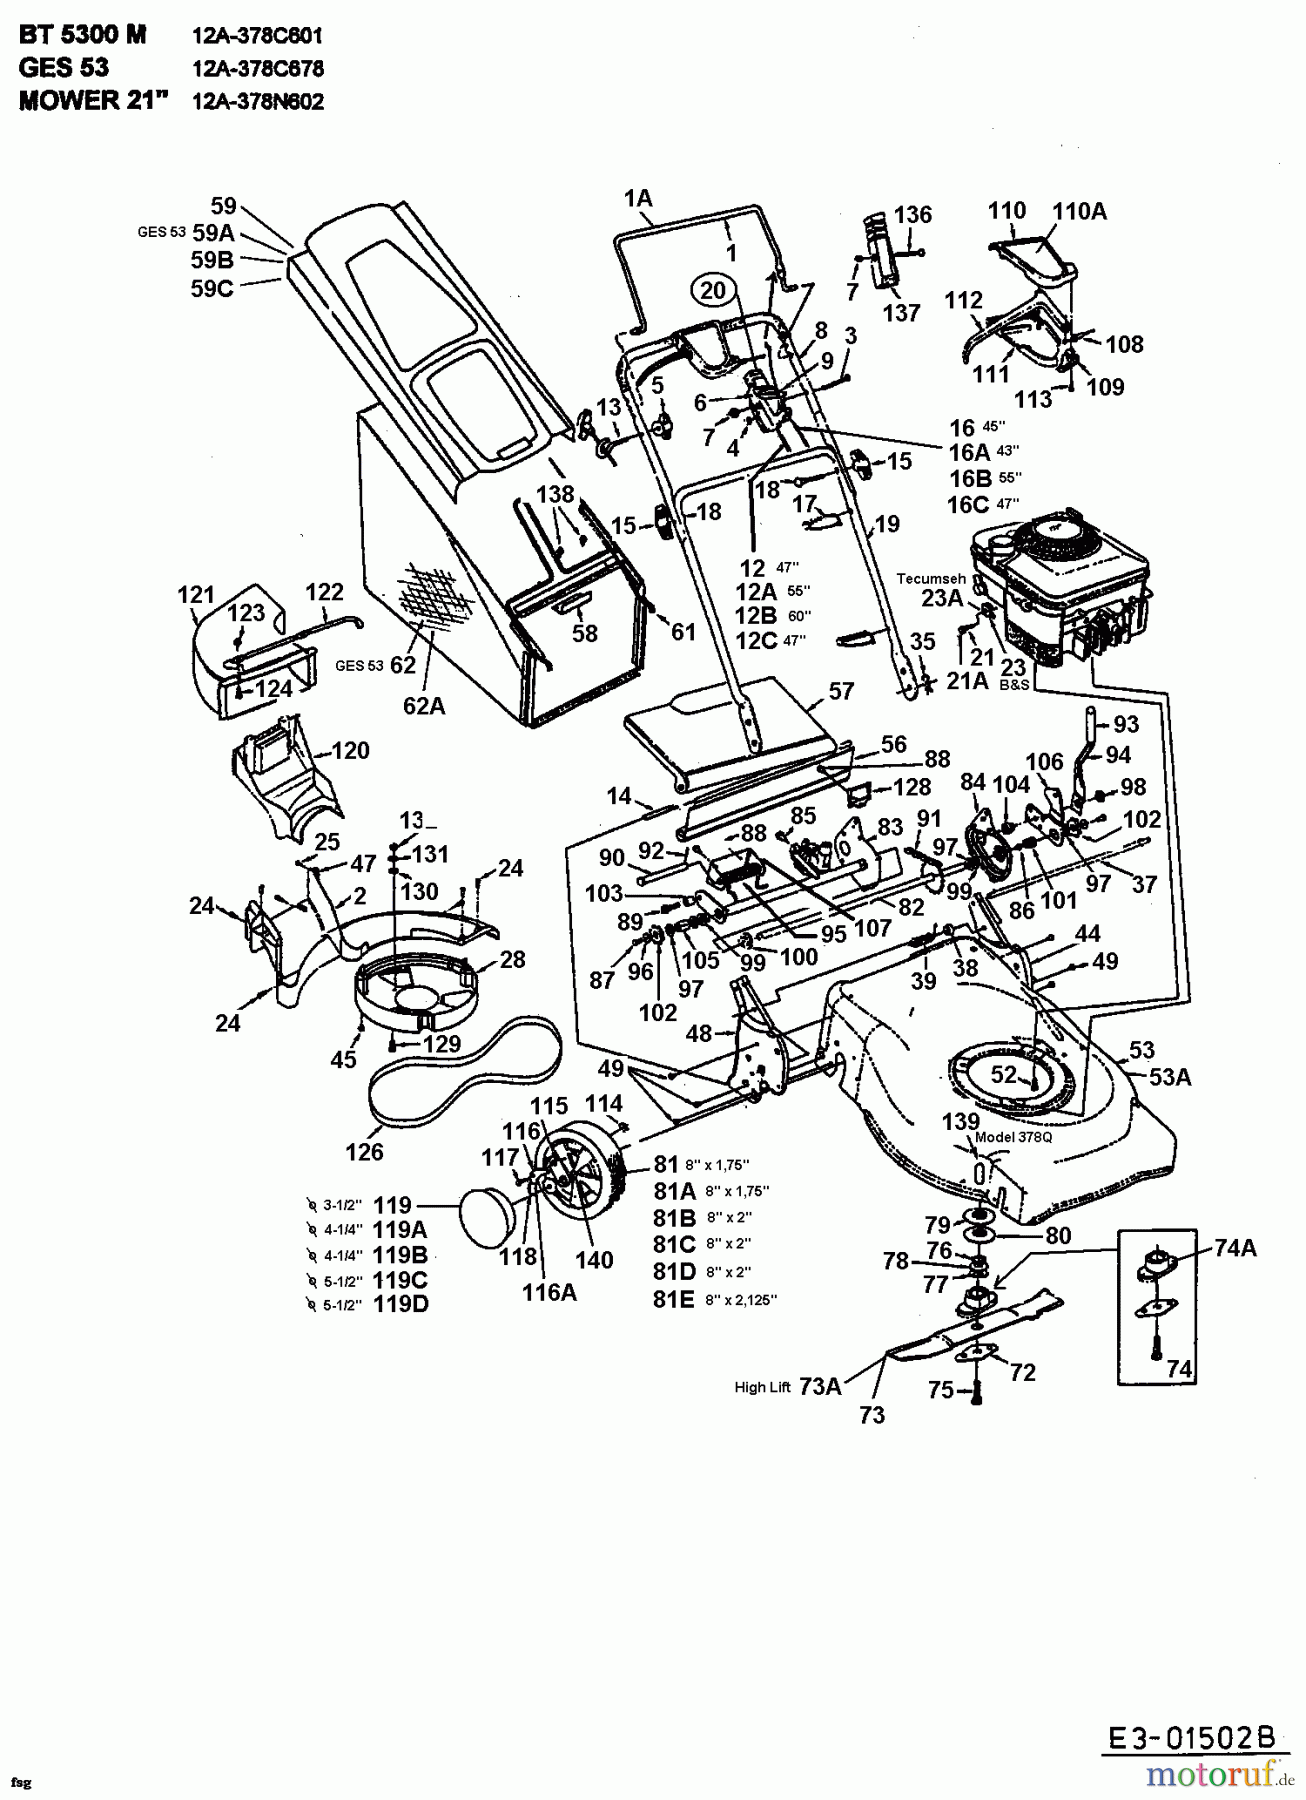  MTD Motormäher mit Antrieb GES 53 E 12AE378O678  (2000) Grundgerät